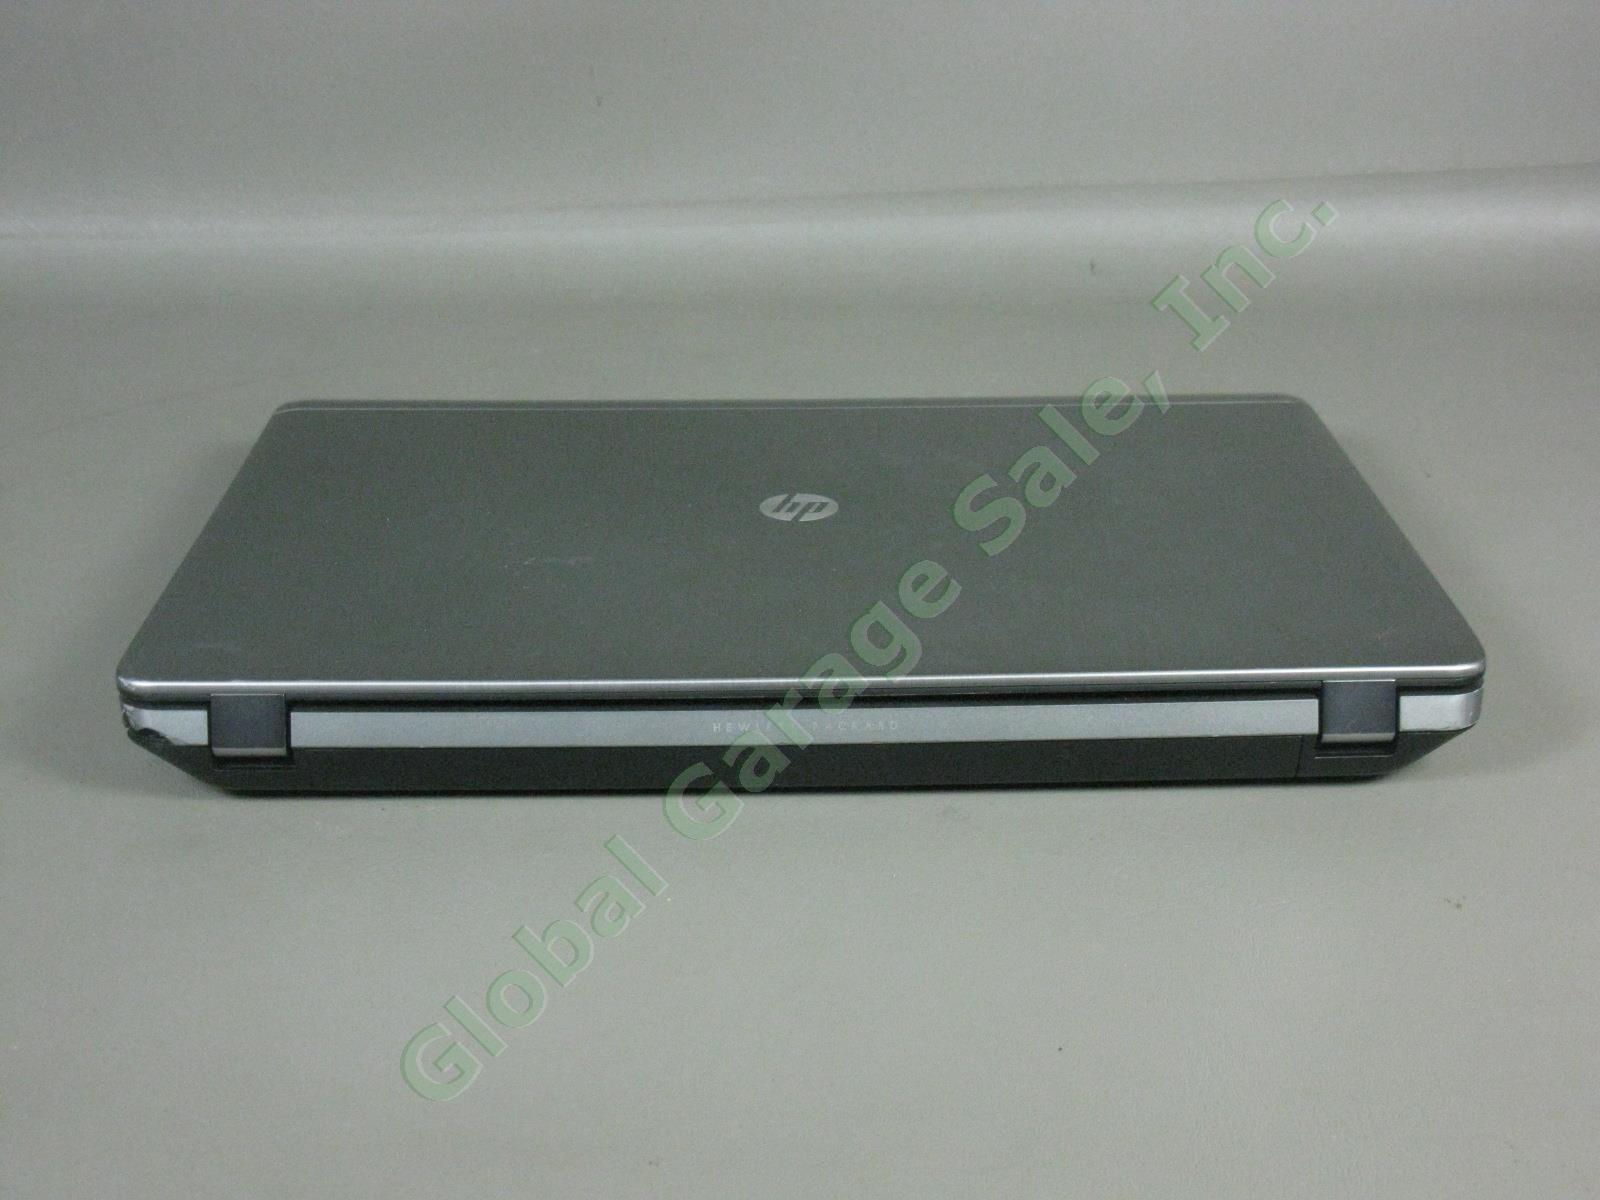 HP ProBook 4540s Laptop Intel i3 2.40GHz 500GB HDD 4GB RAM Win 10 Works Great! 5